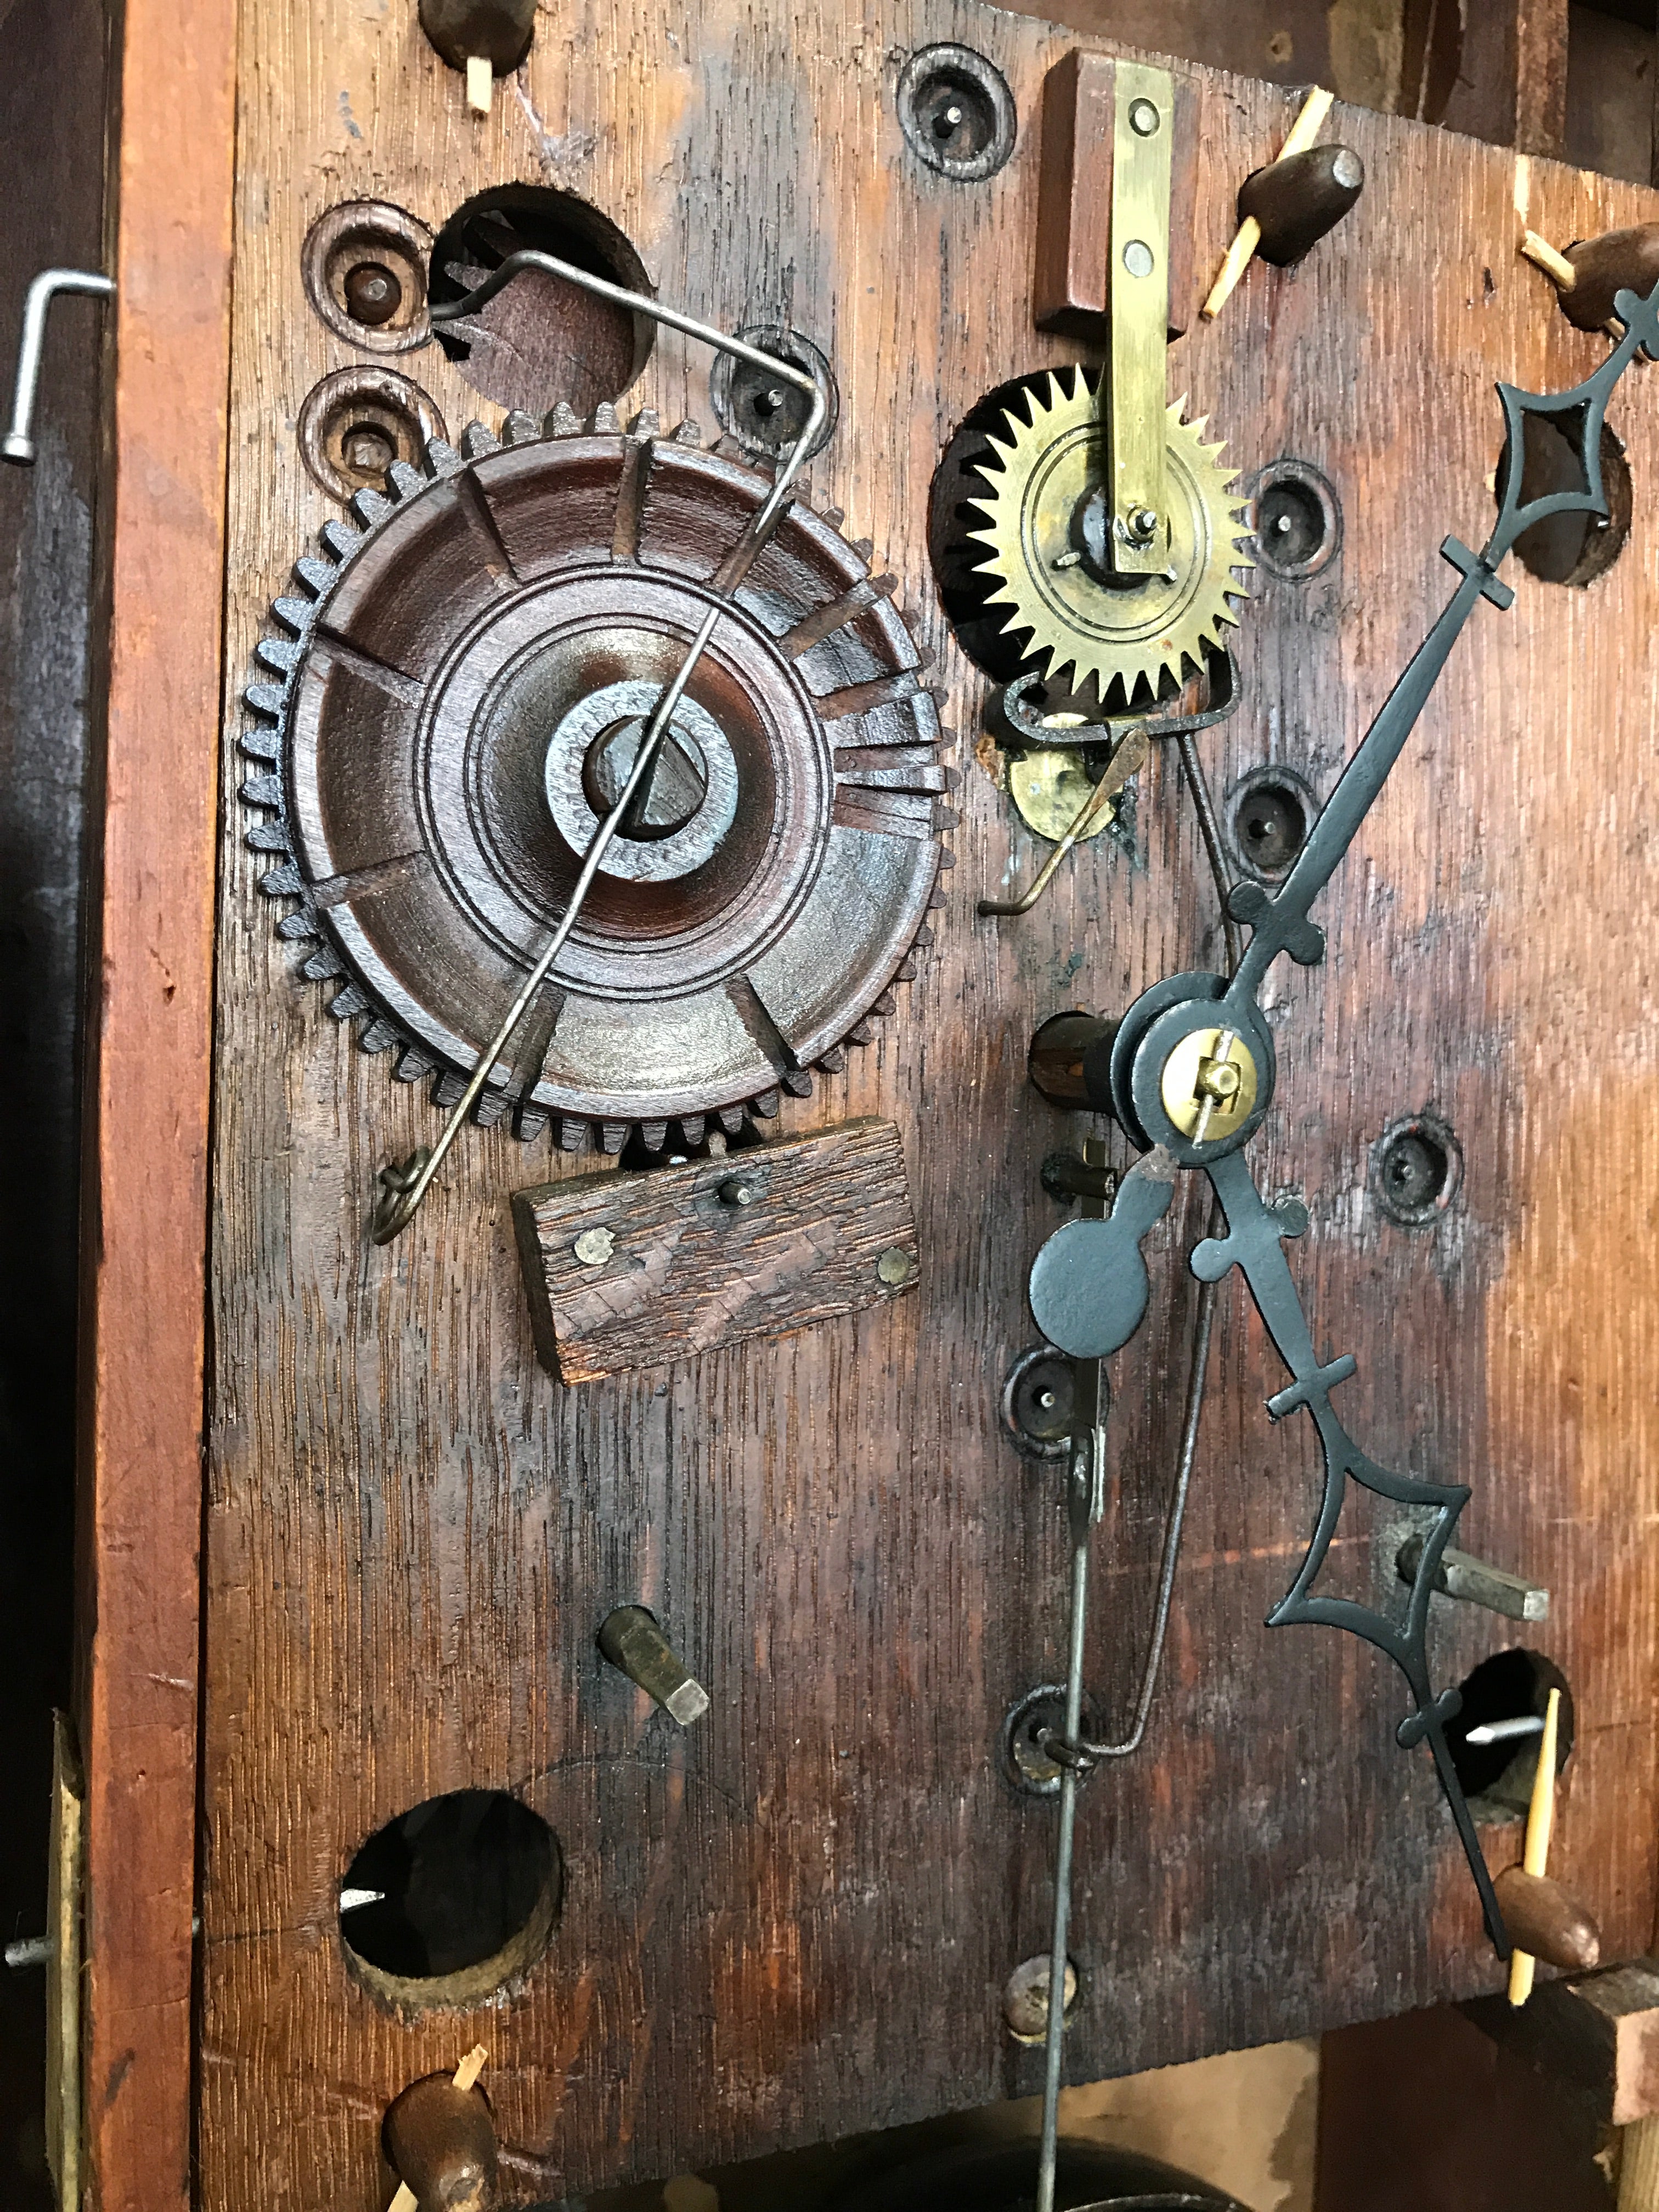 Antique Marsh, Gilbert & Co. Wall Clock | eXibit collection